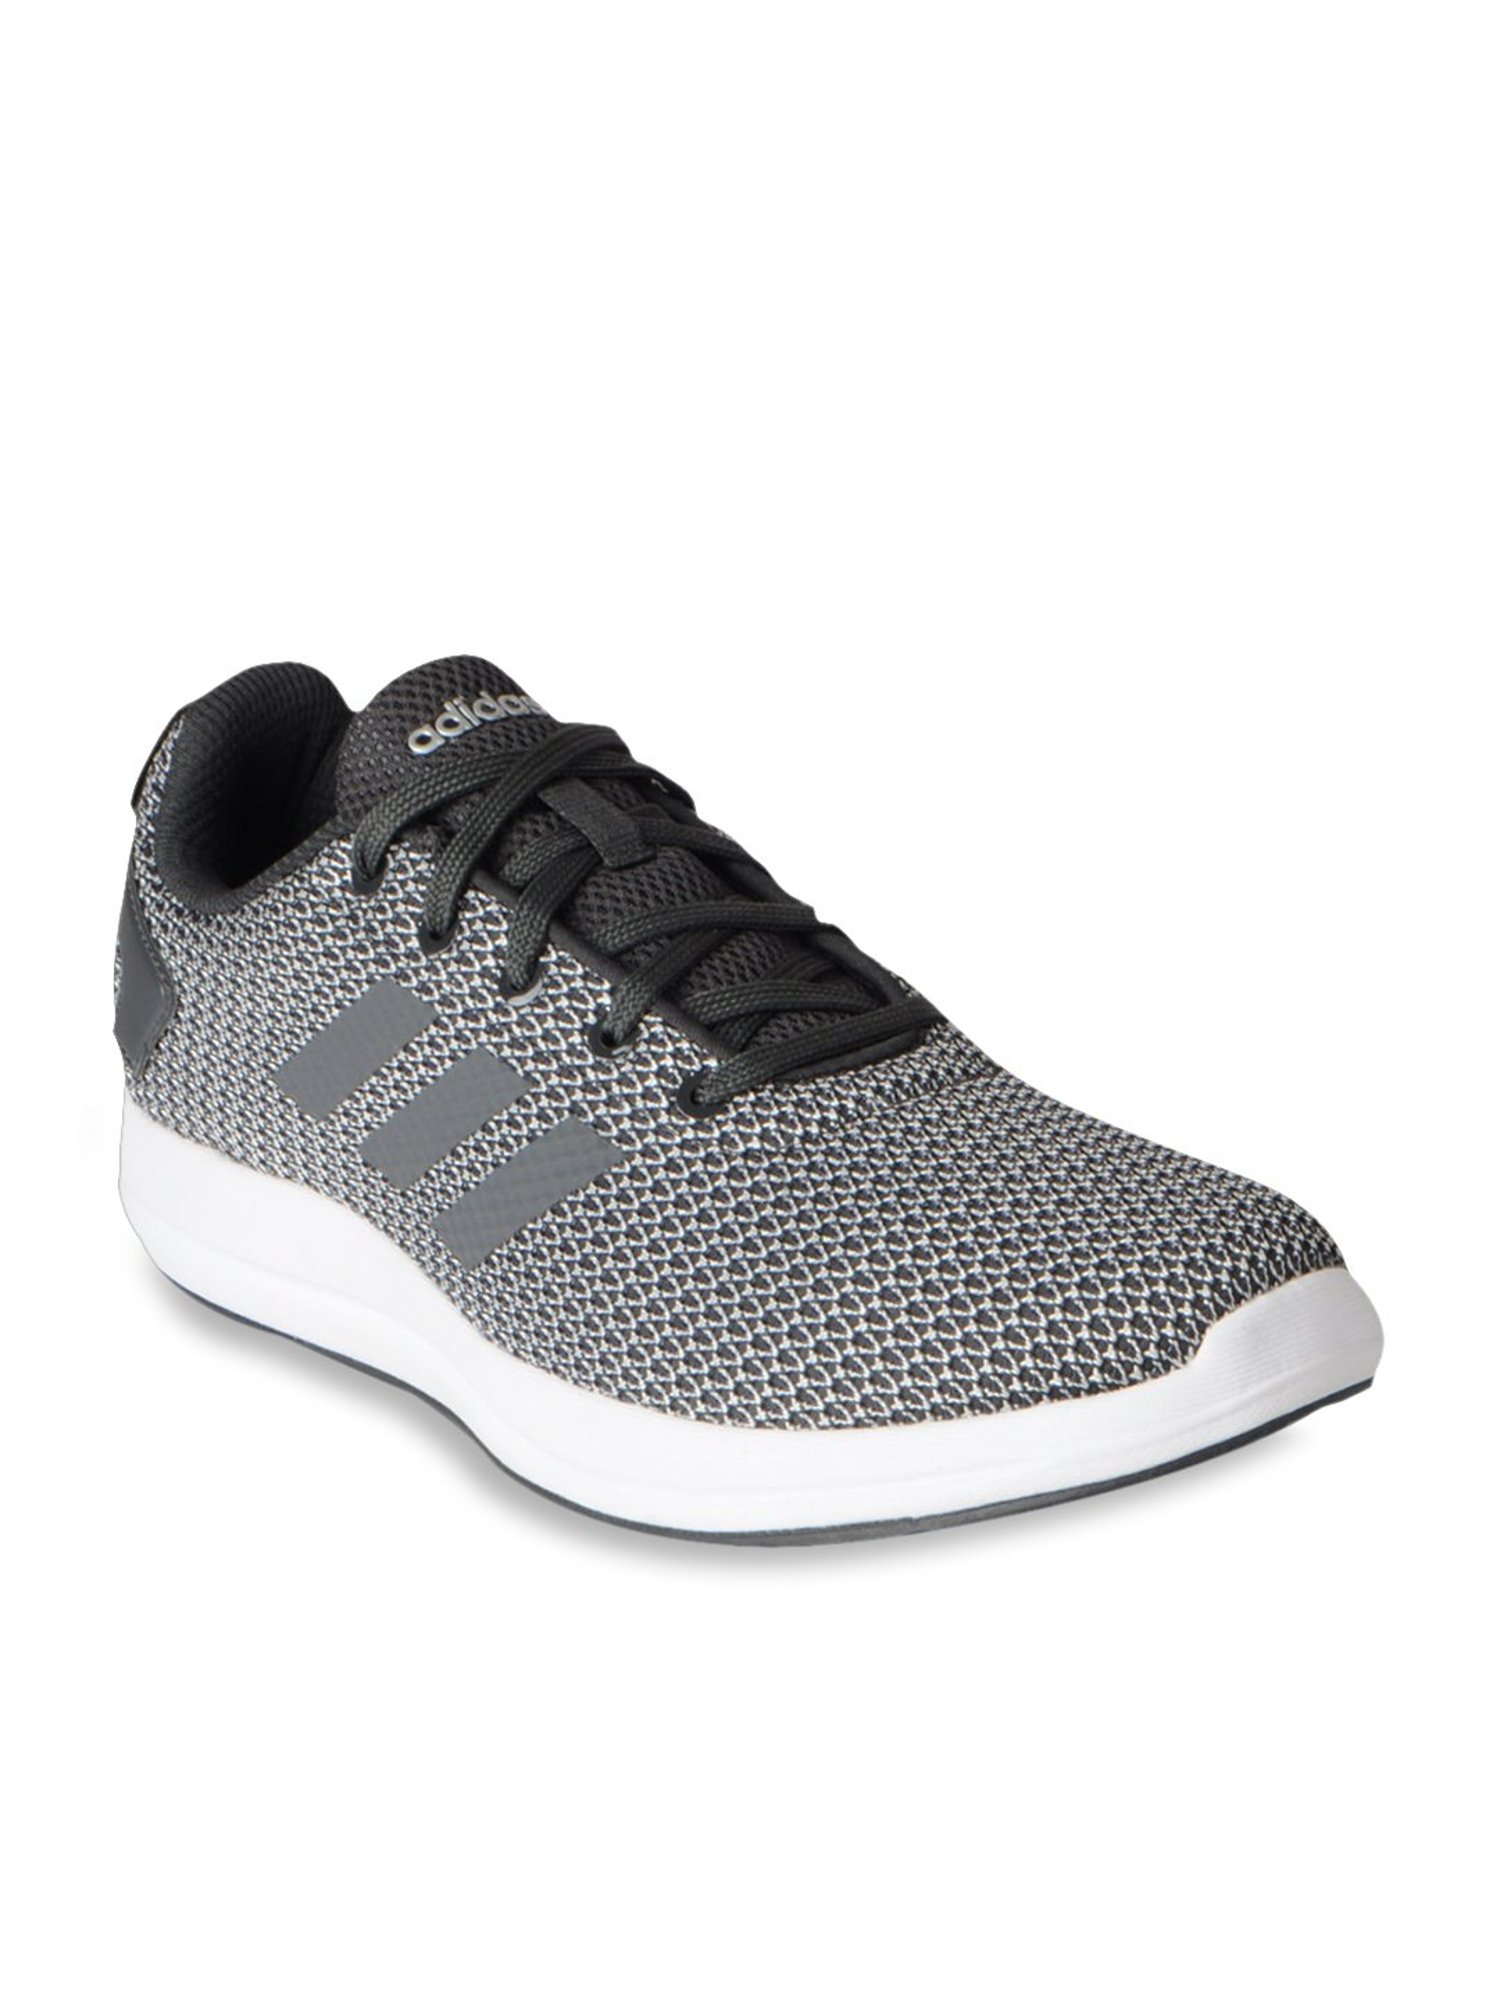 Adidas Adistark 30 Grey Running Shoes 